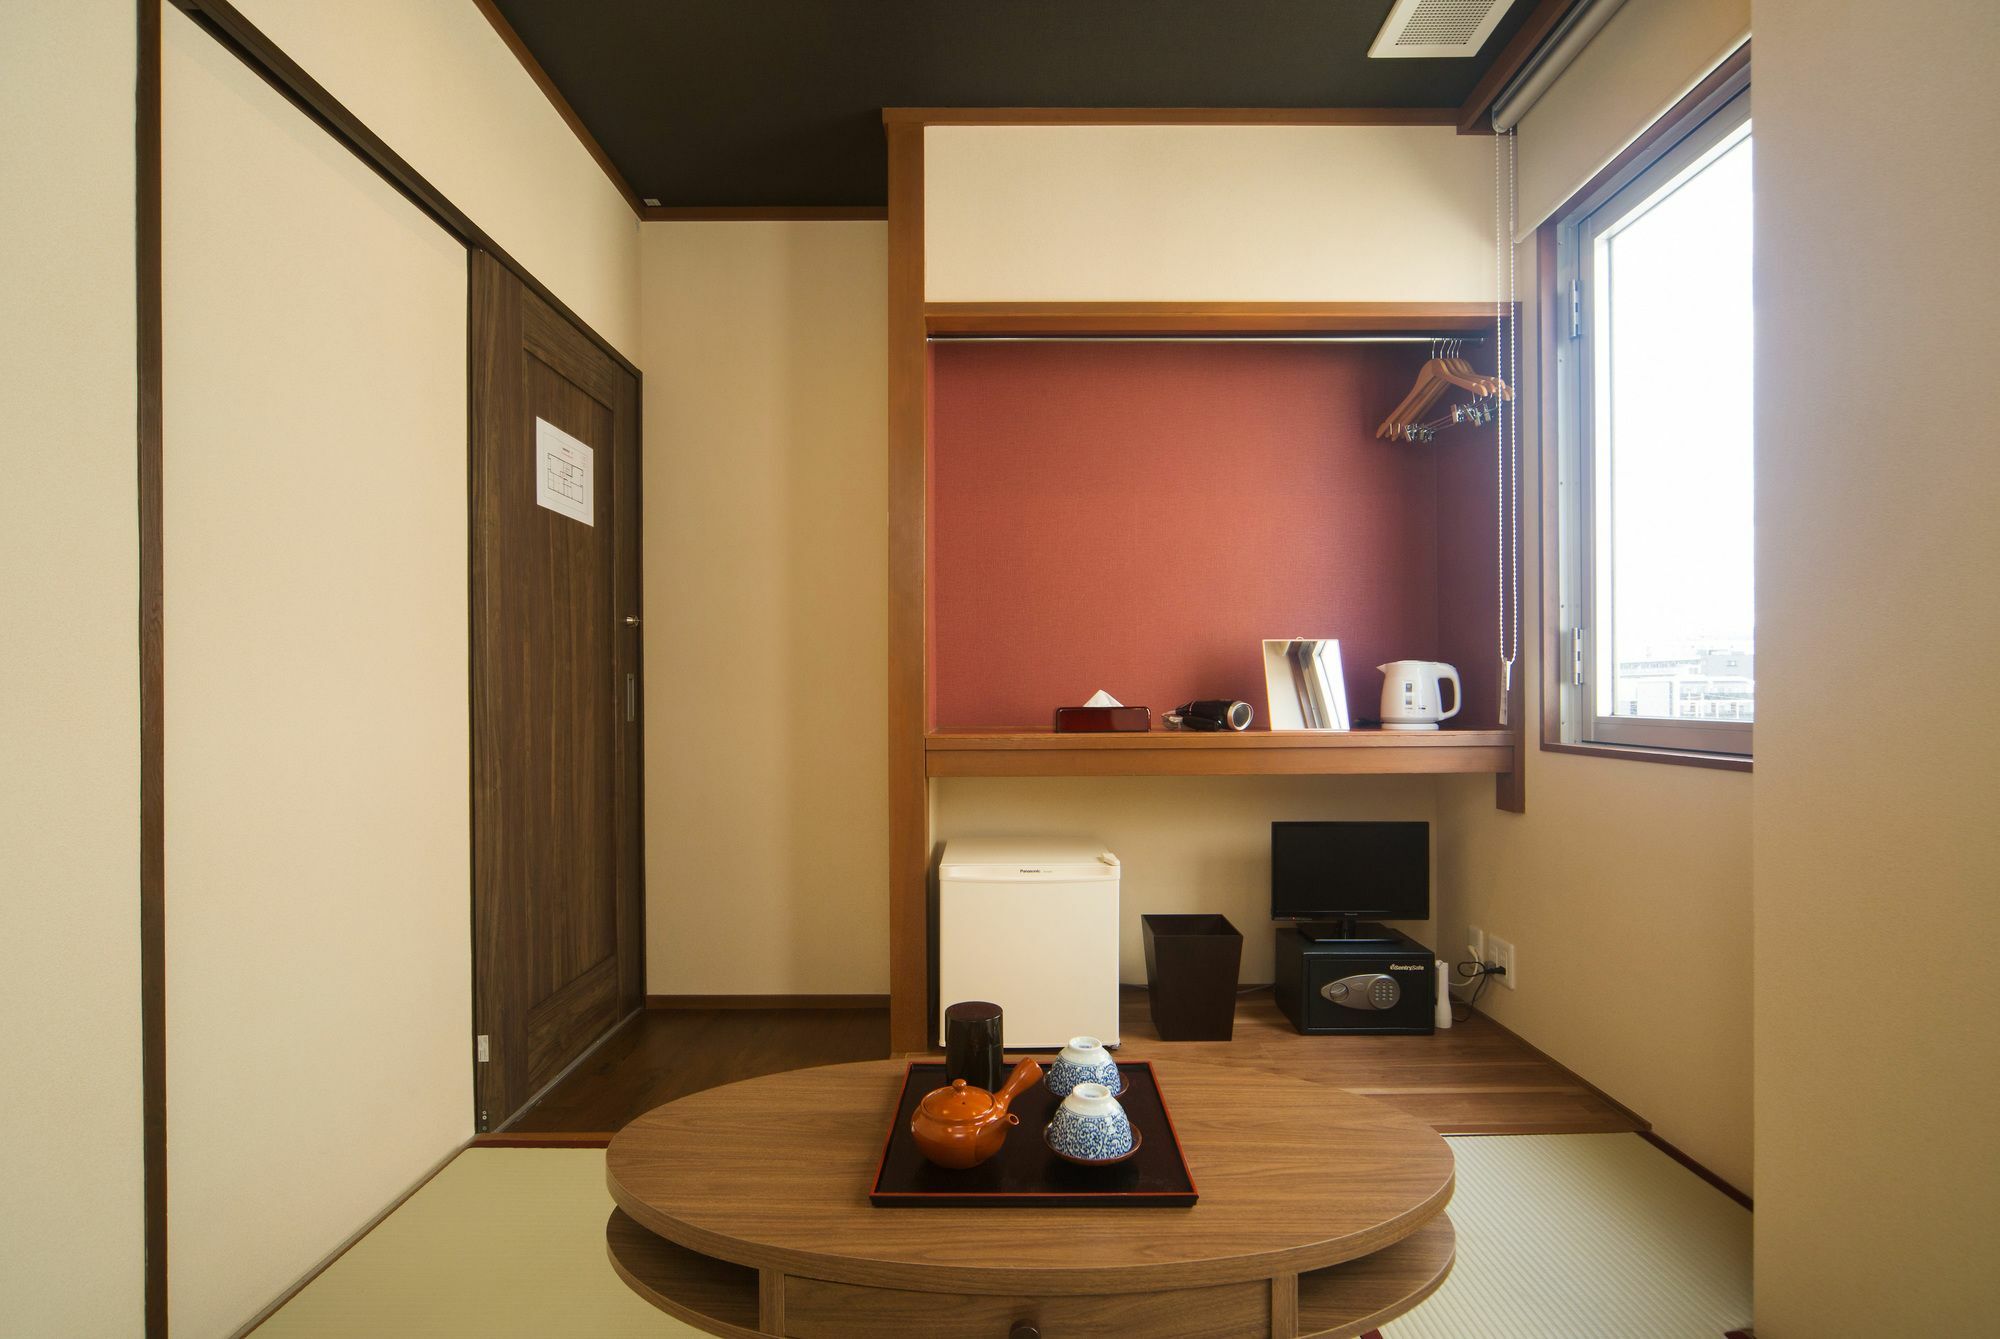 Hostel Seiki Kyoto Station Exteriér fotografie